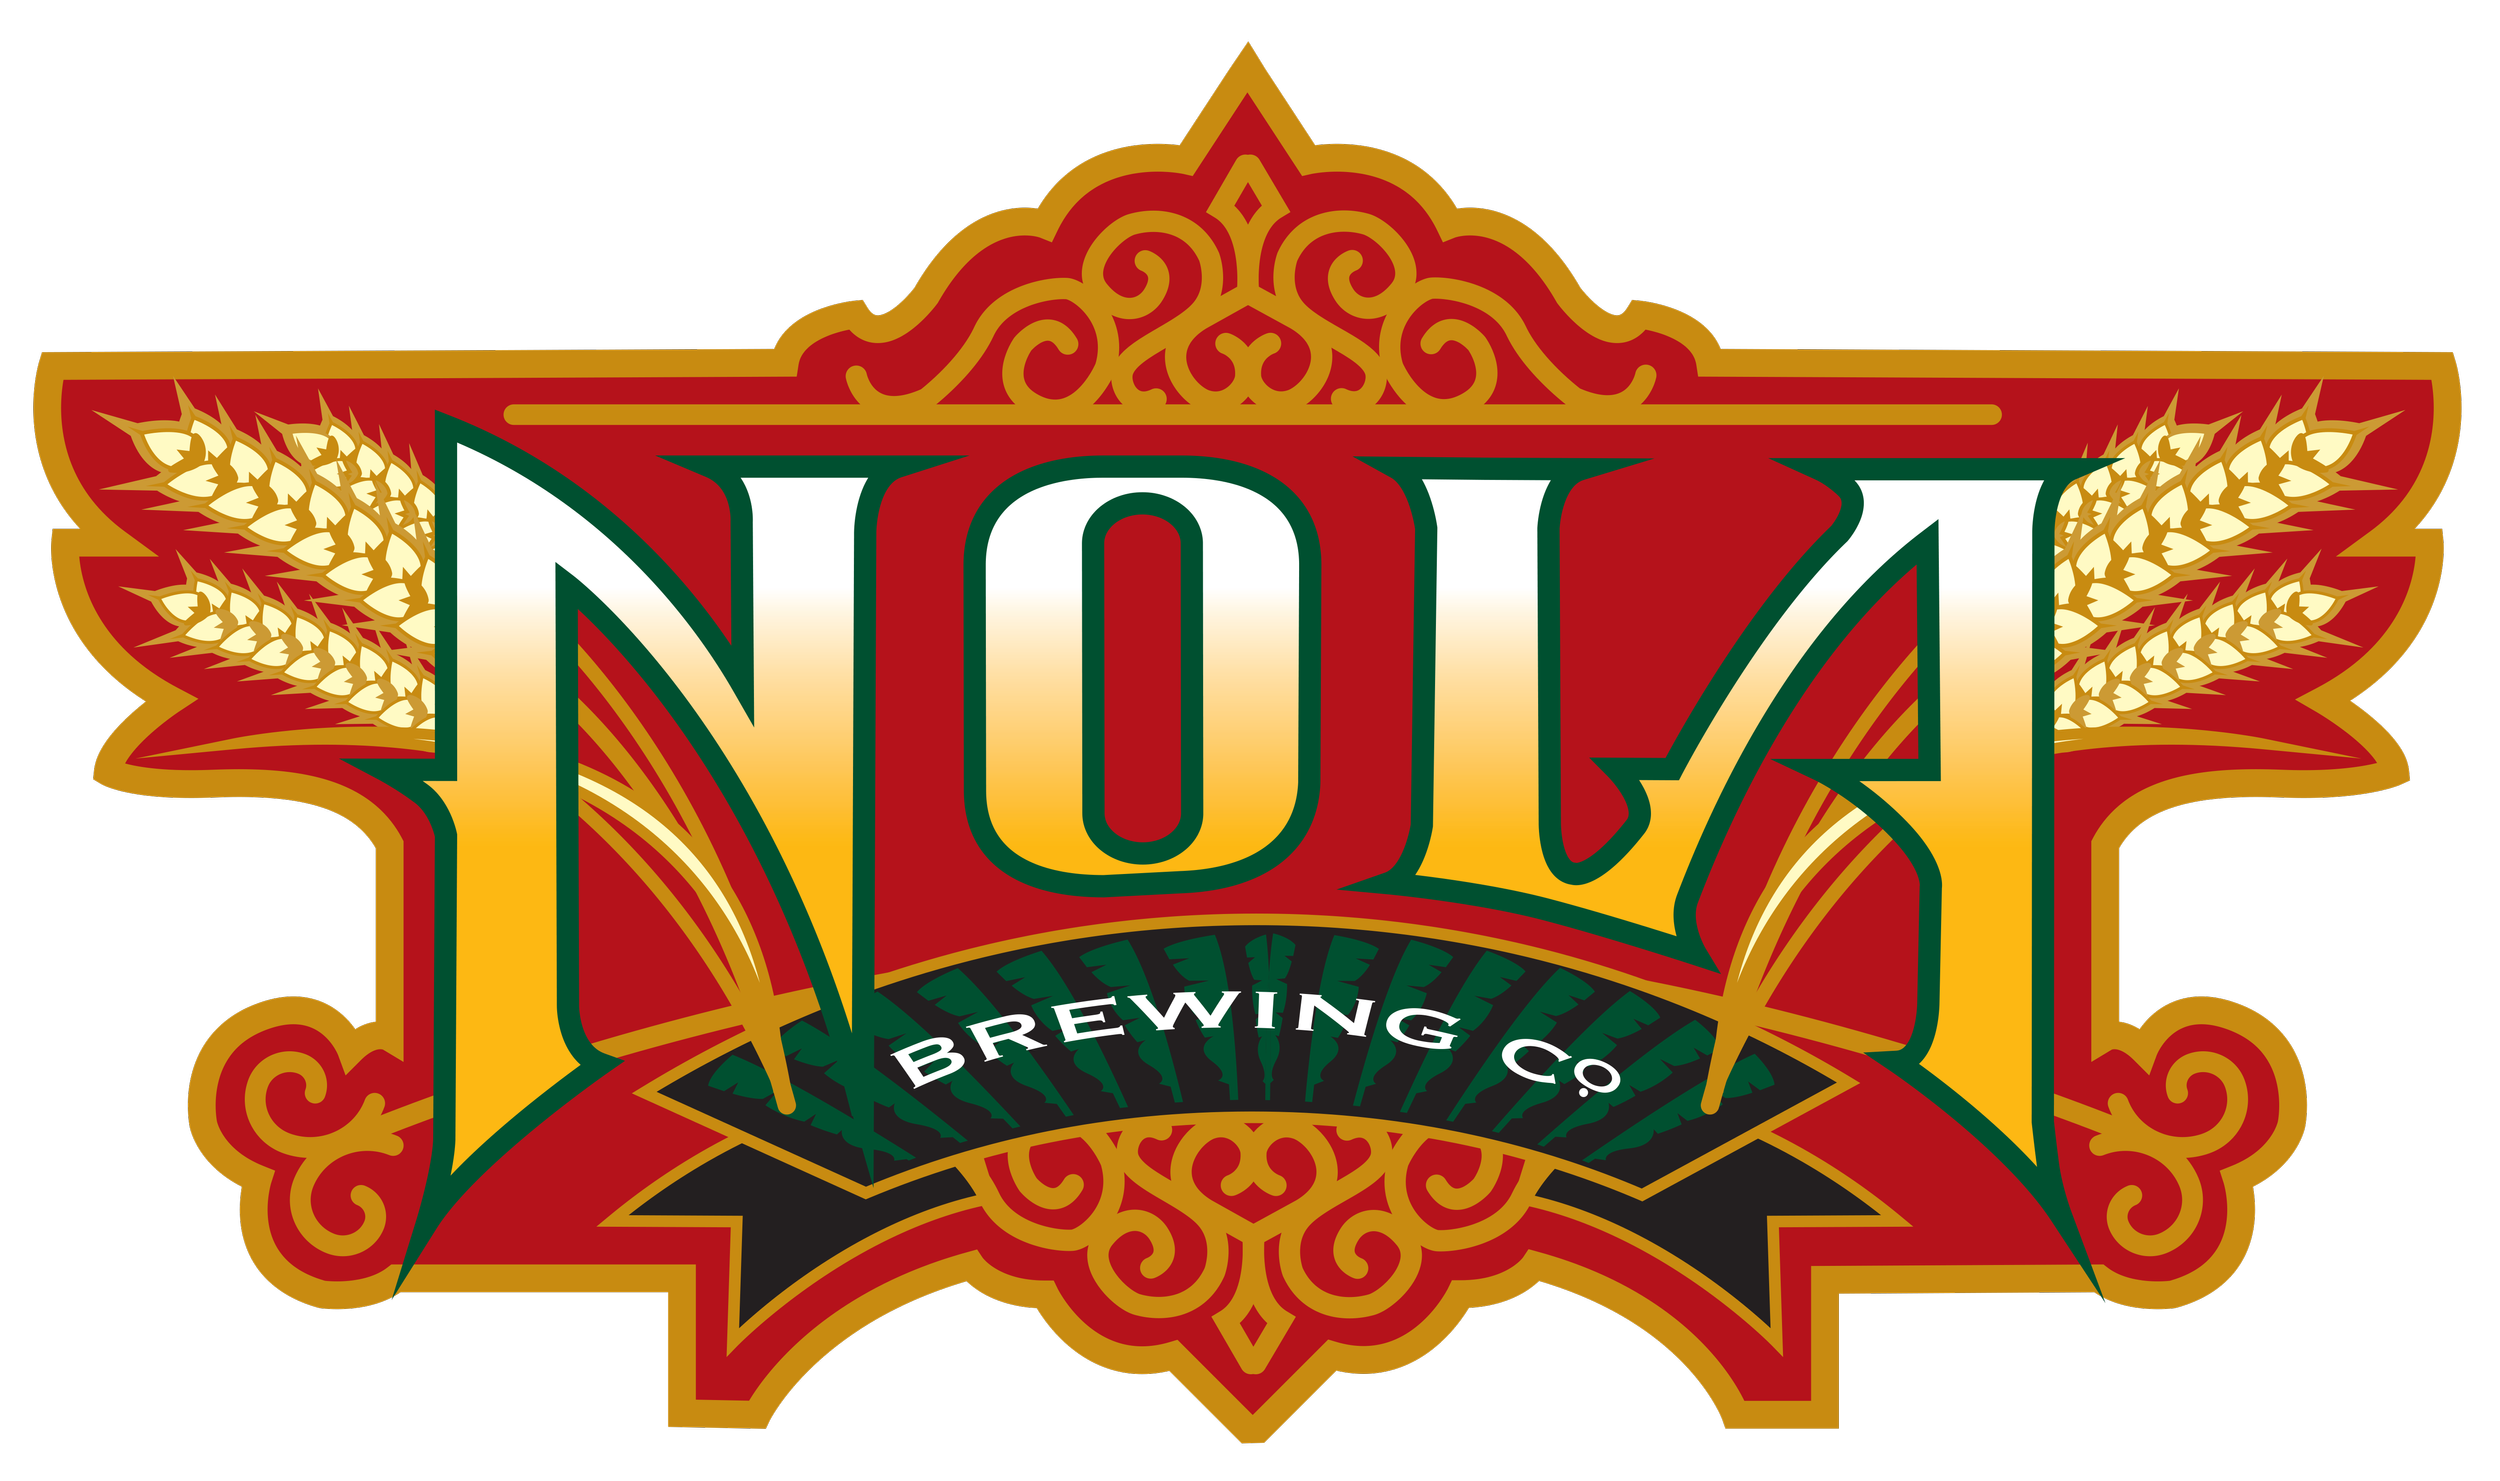 NOLA_BrewingCo_PantoneSpot.png